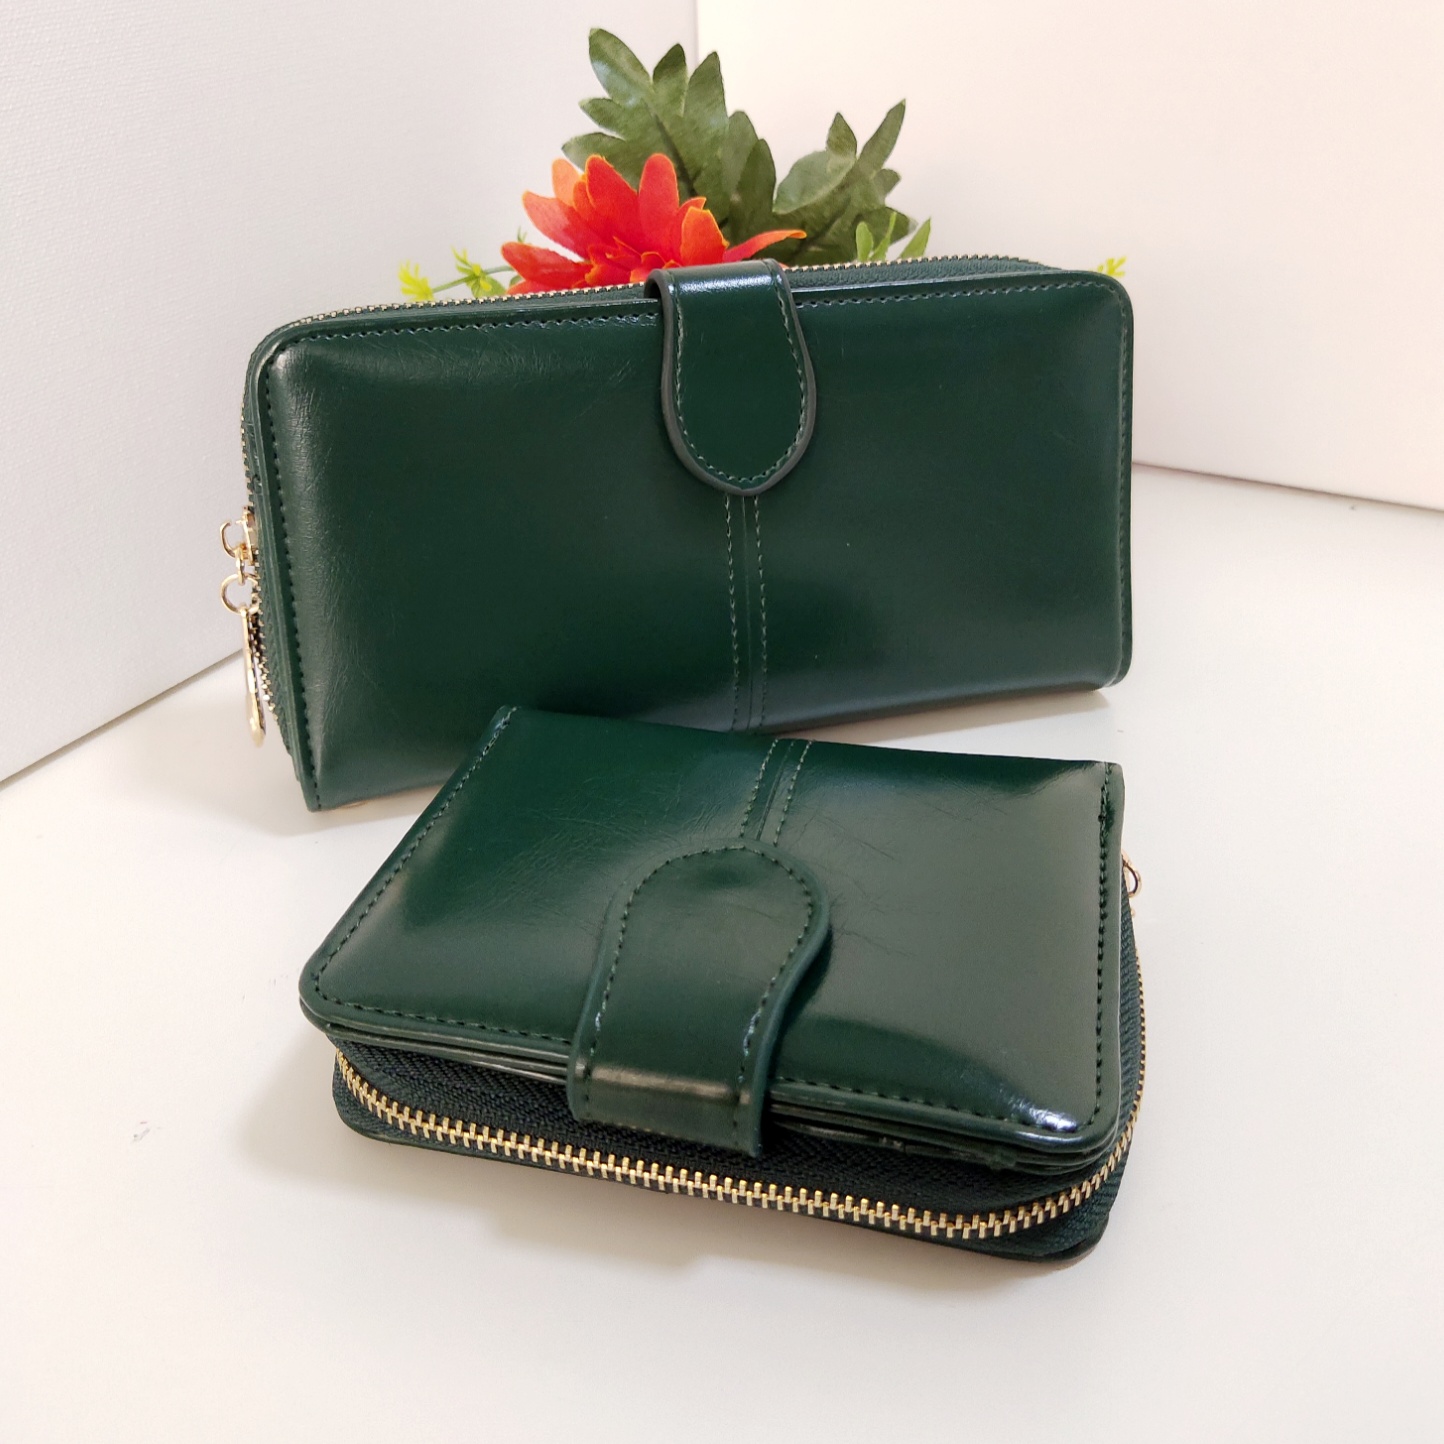 KOREAN กระเป๋าสตางค์ชุดเซ็ตใบสั้น+ใบยาว 2 ใบในราคาพิเศษ ใบยาวมีสายค้องมือ รุ่น A006-LS(สีเขียว)